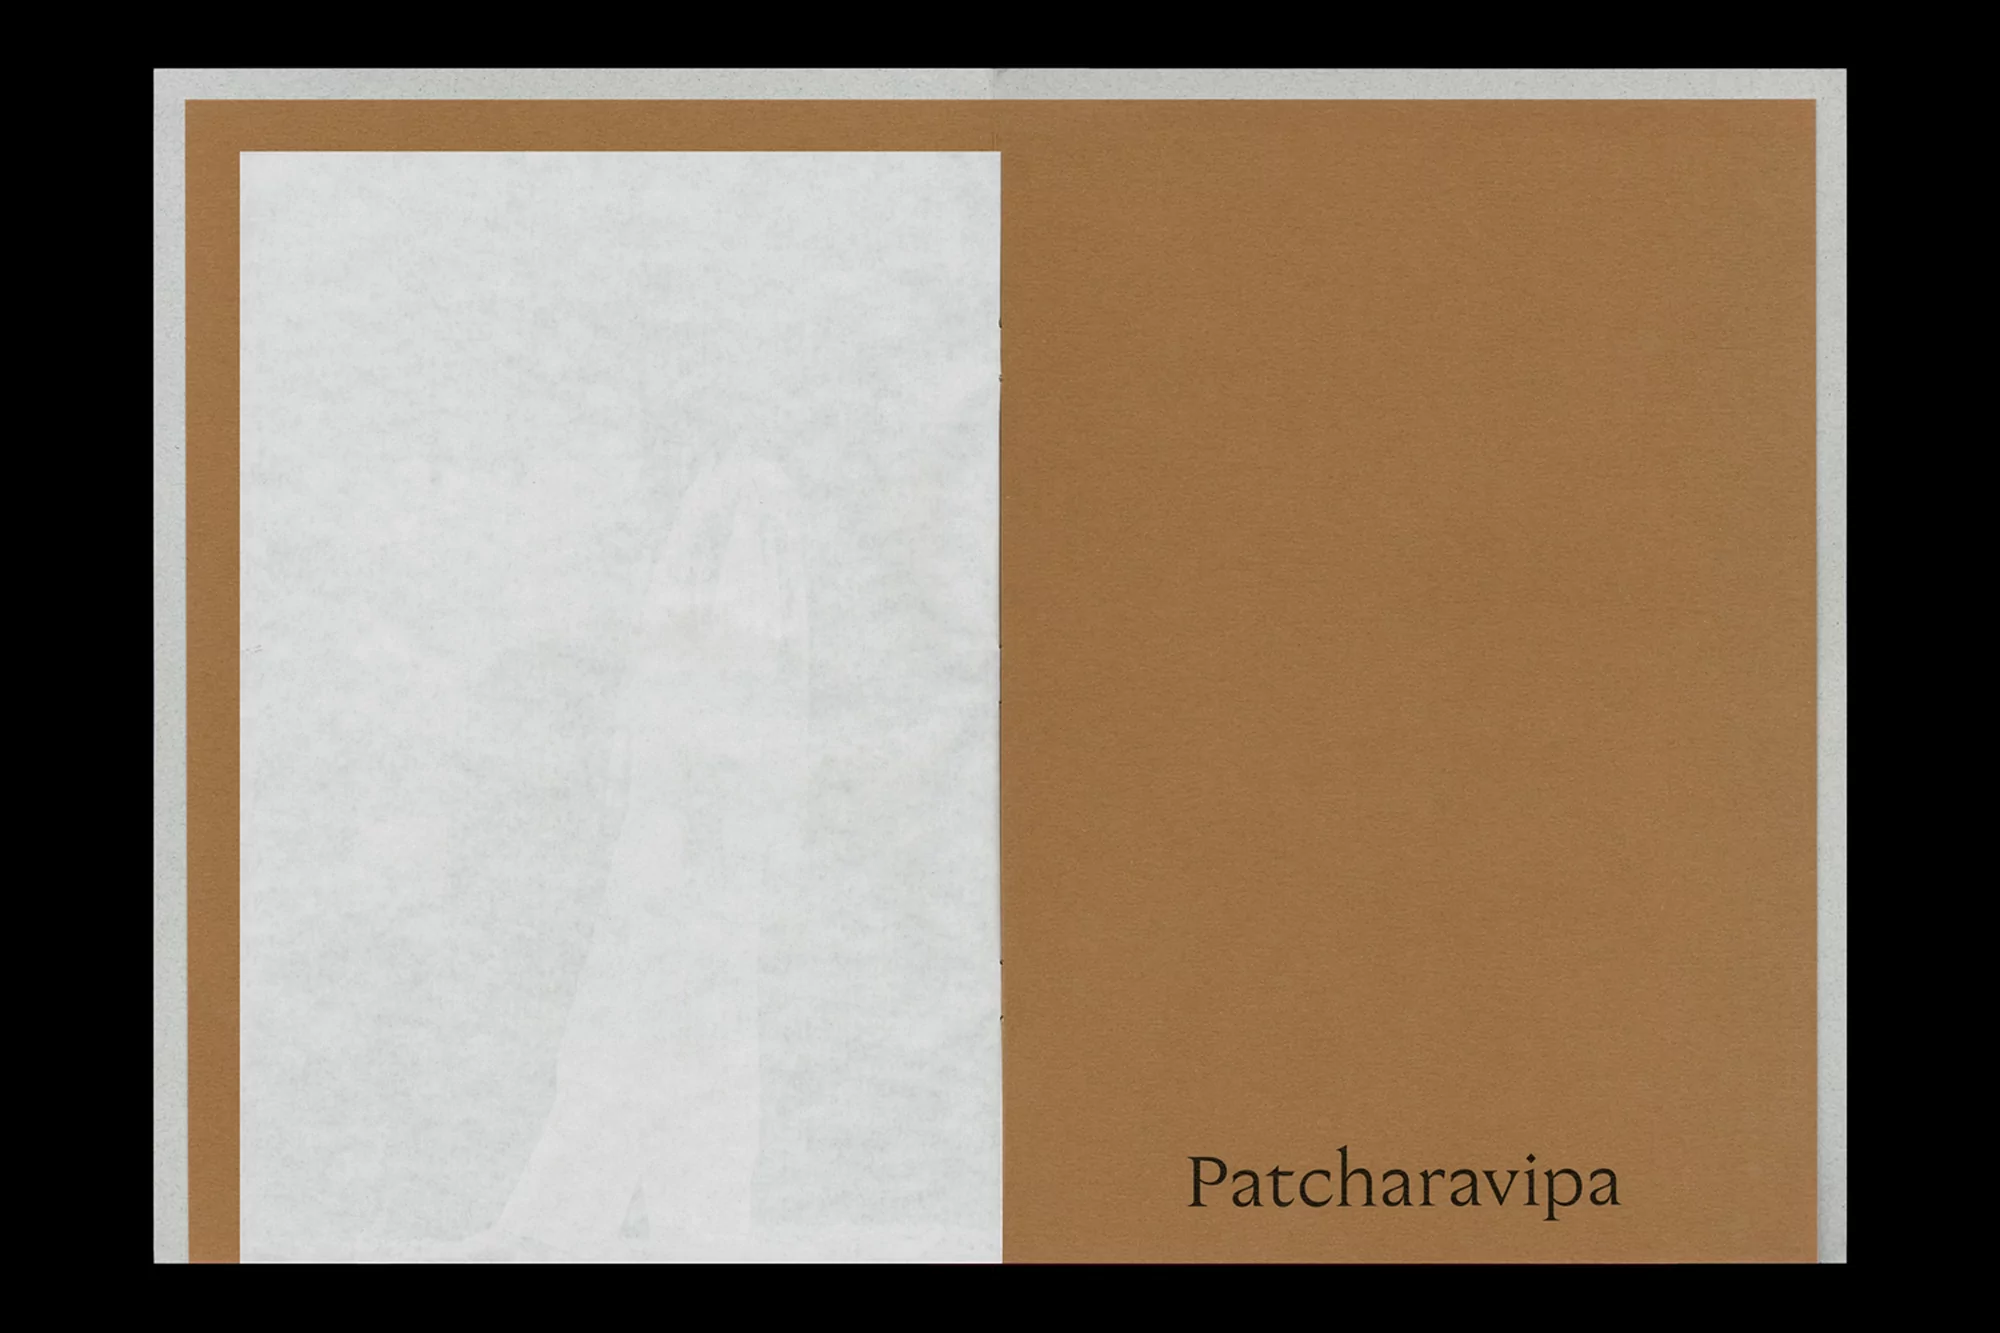 Patcharavipa by OK-RM